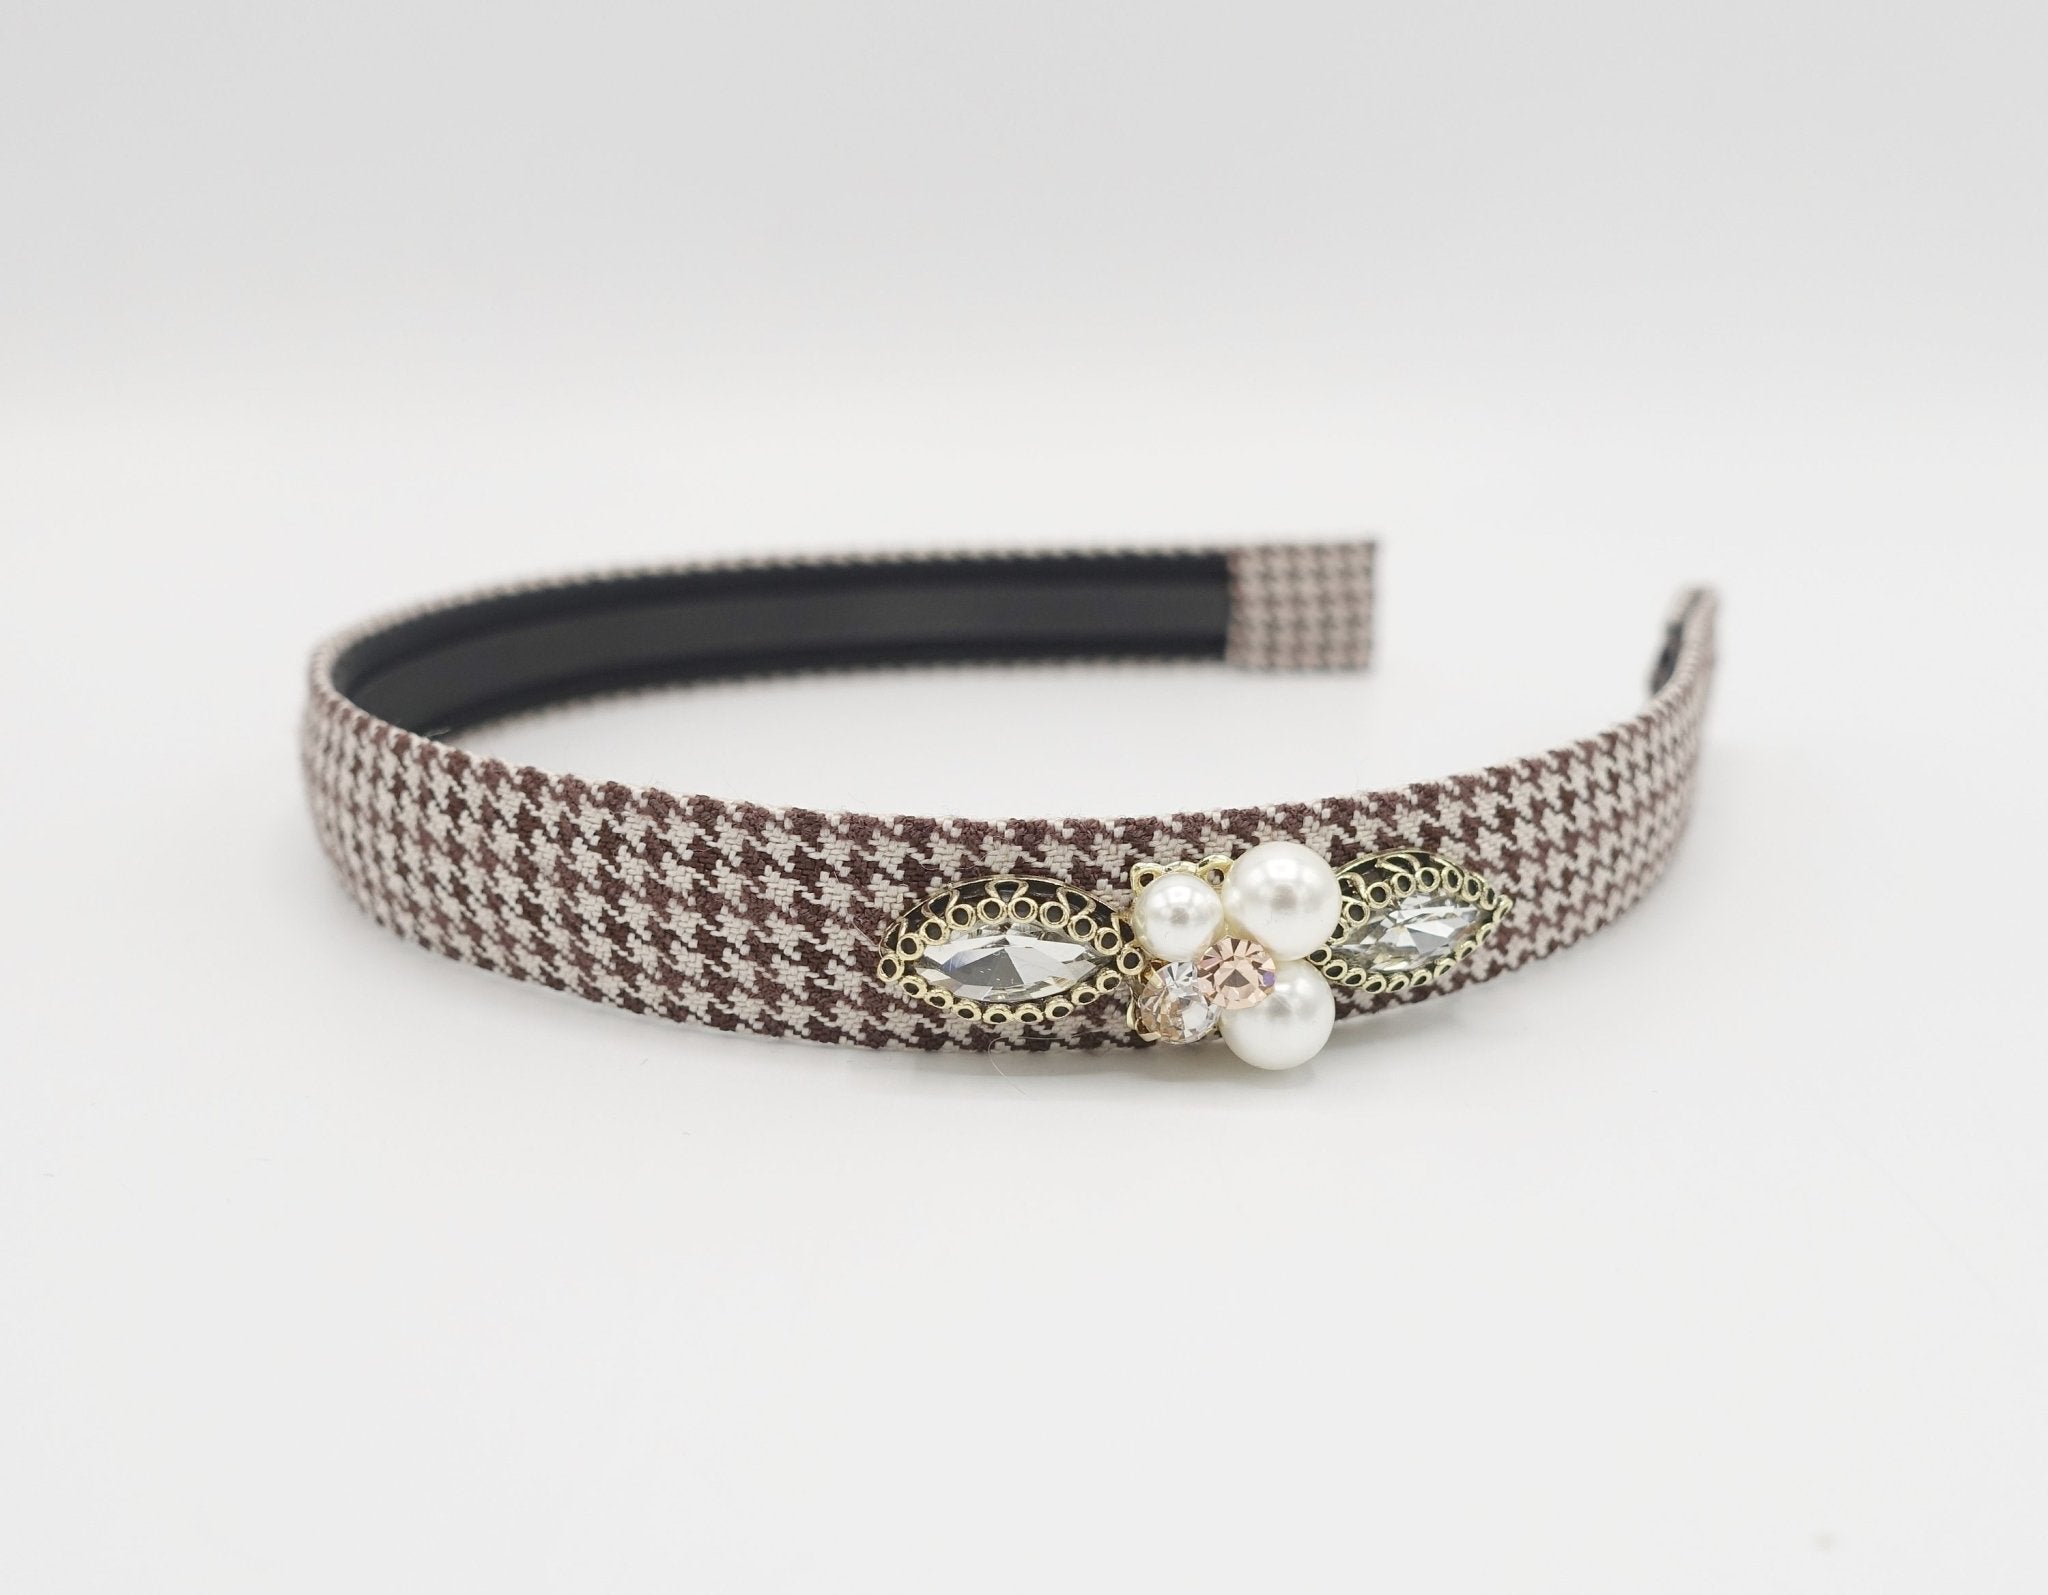 VeryShine Headband Brown houndstooth headband jeweled embellished hairband for women